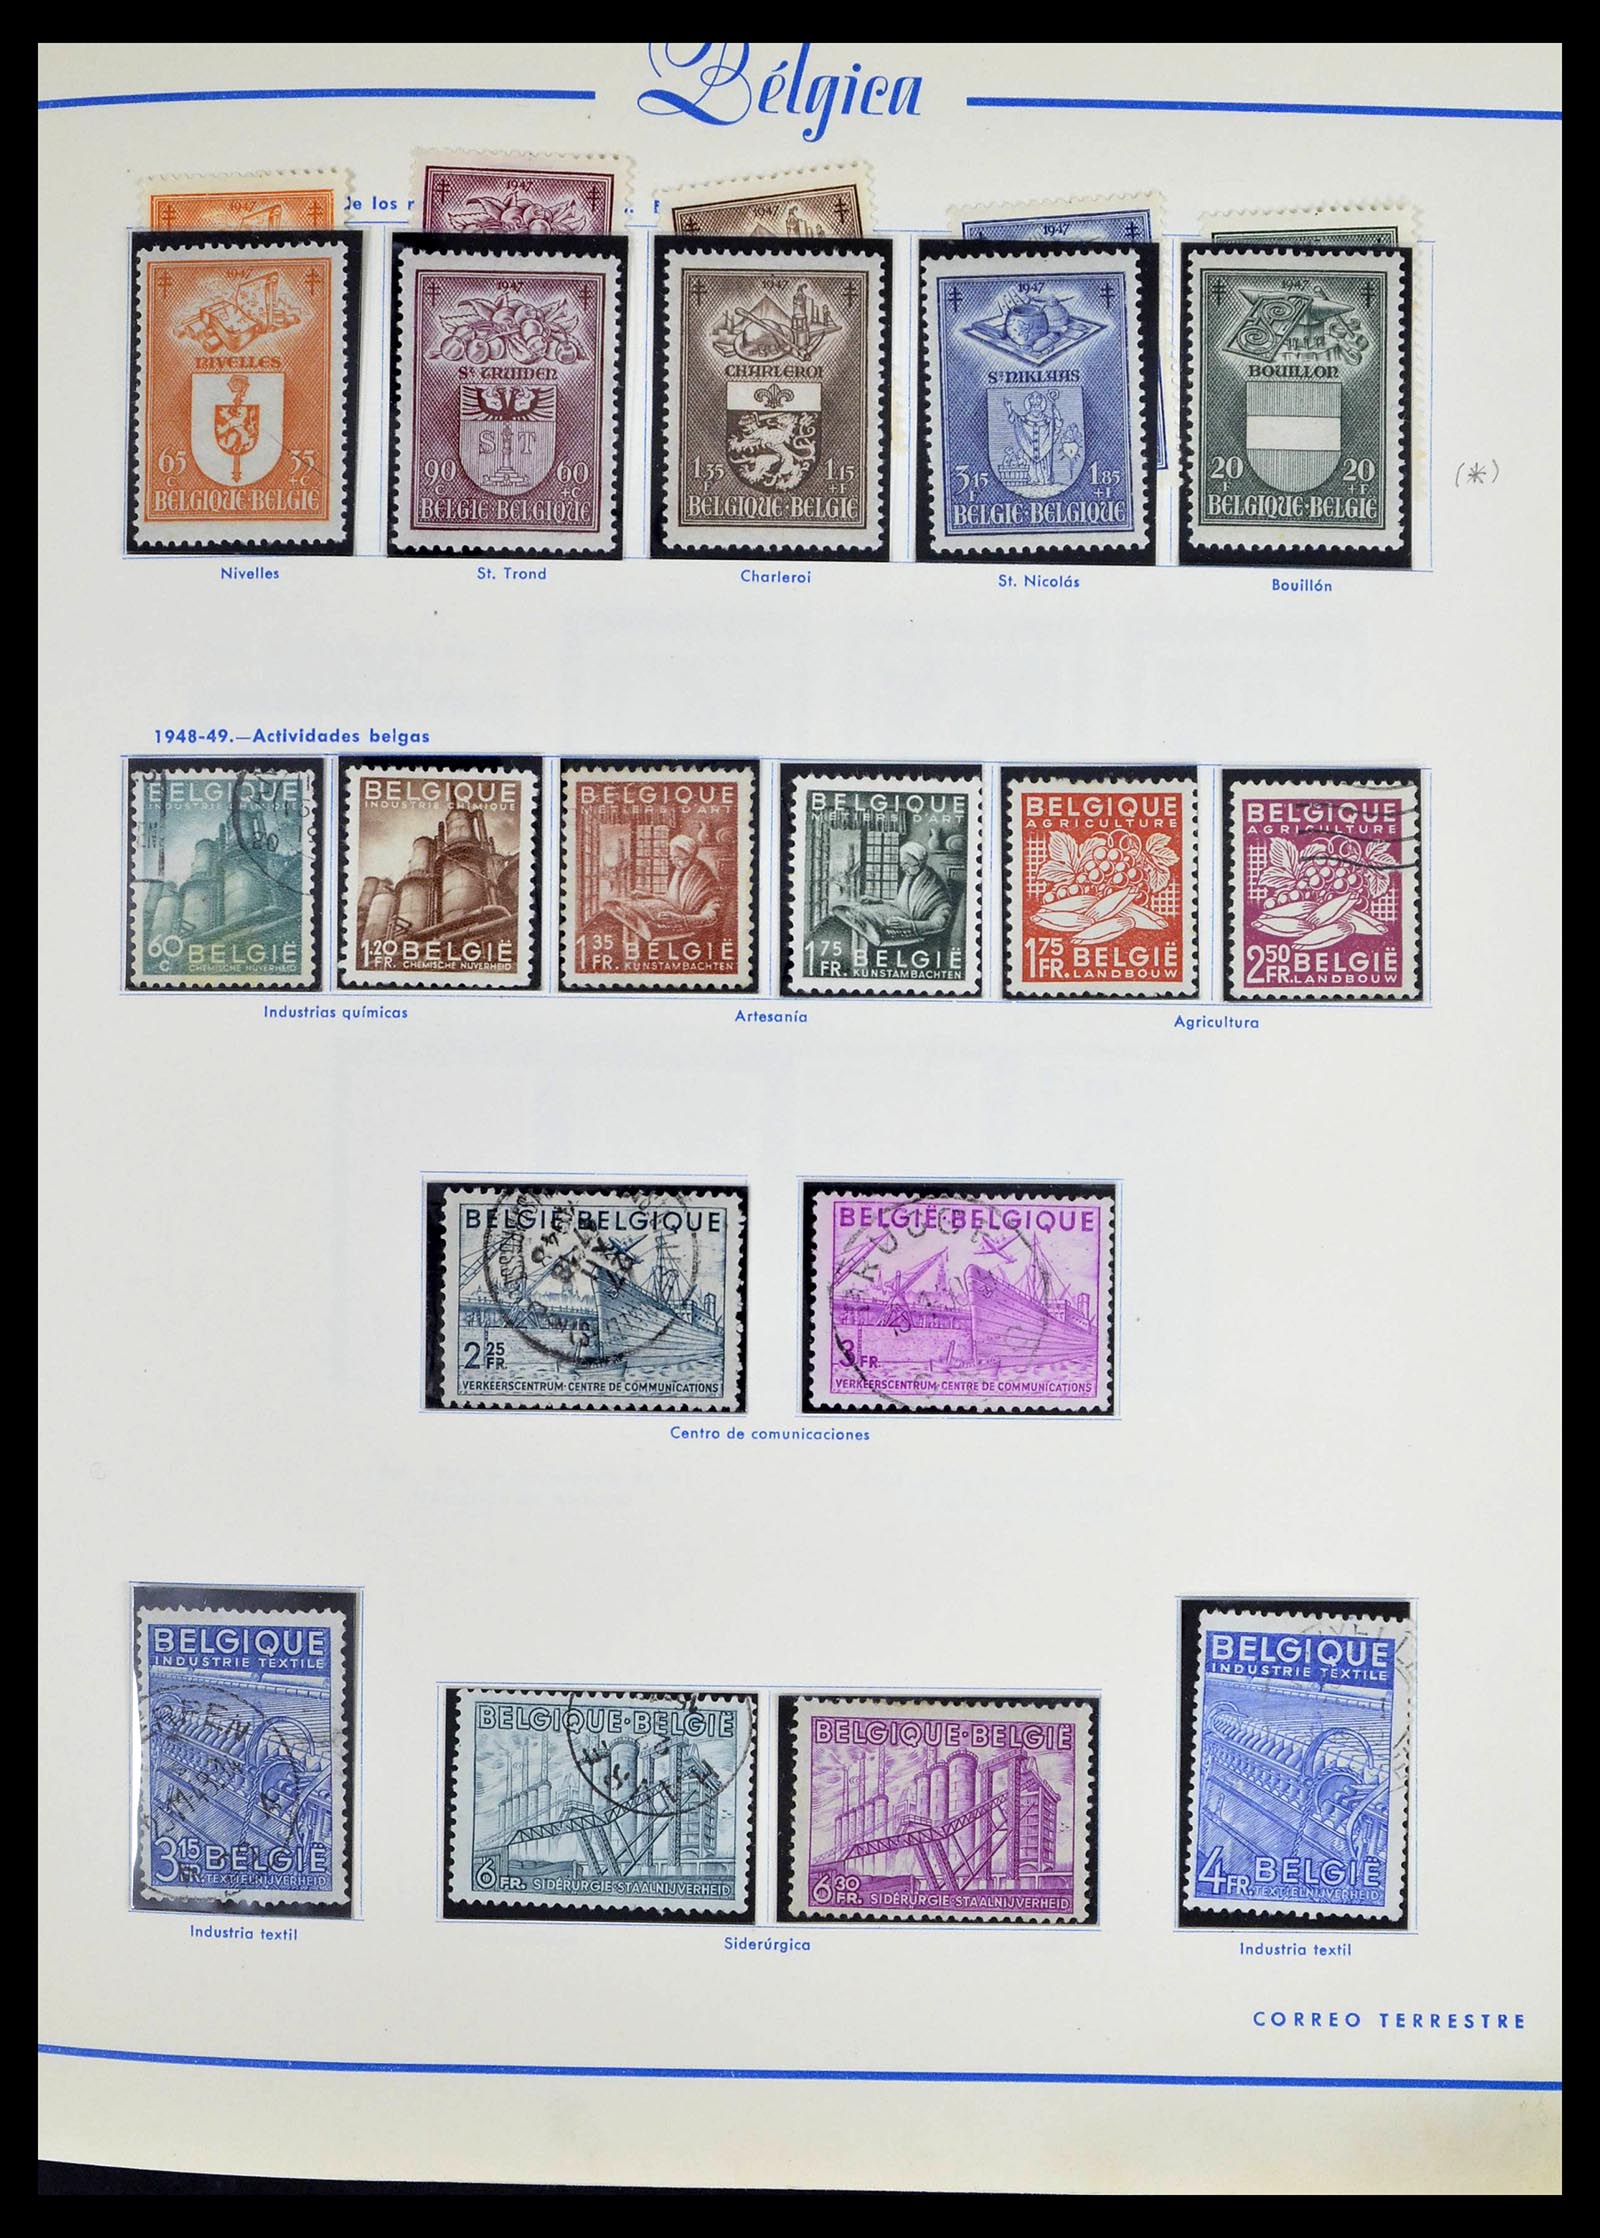 39230 0052 - Stamp collection 39230 Belgium 1849-1976.